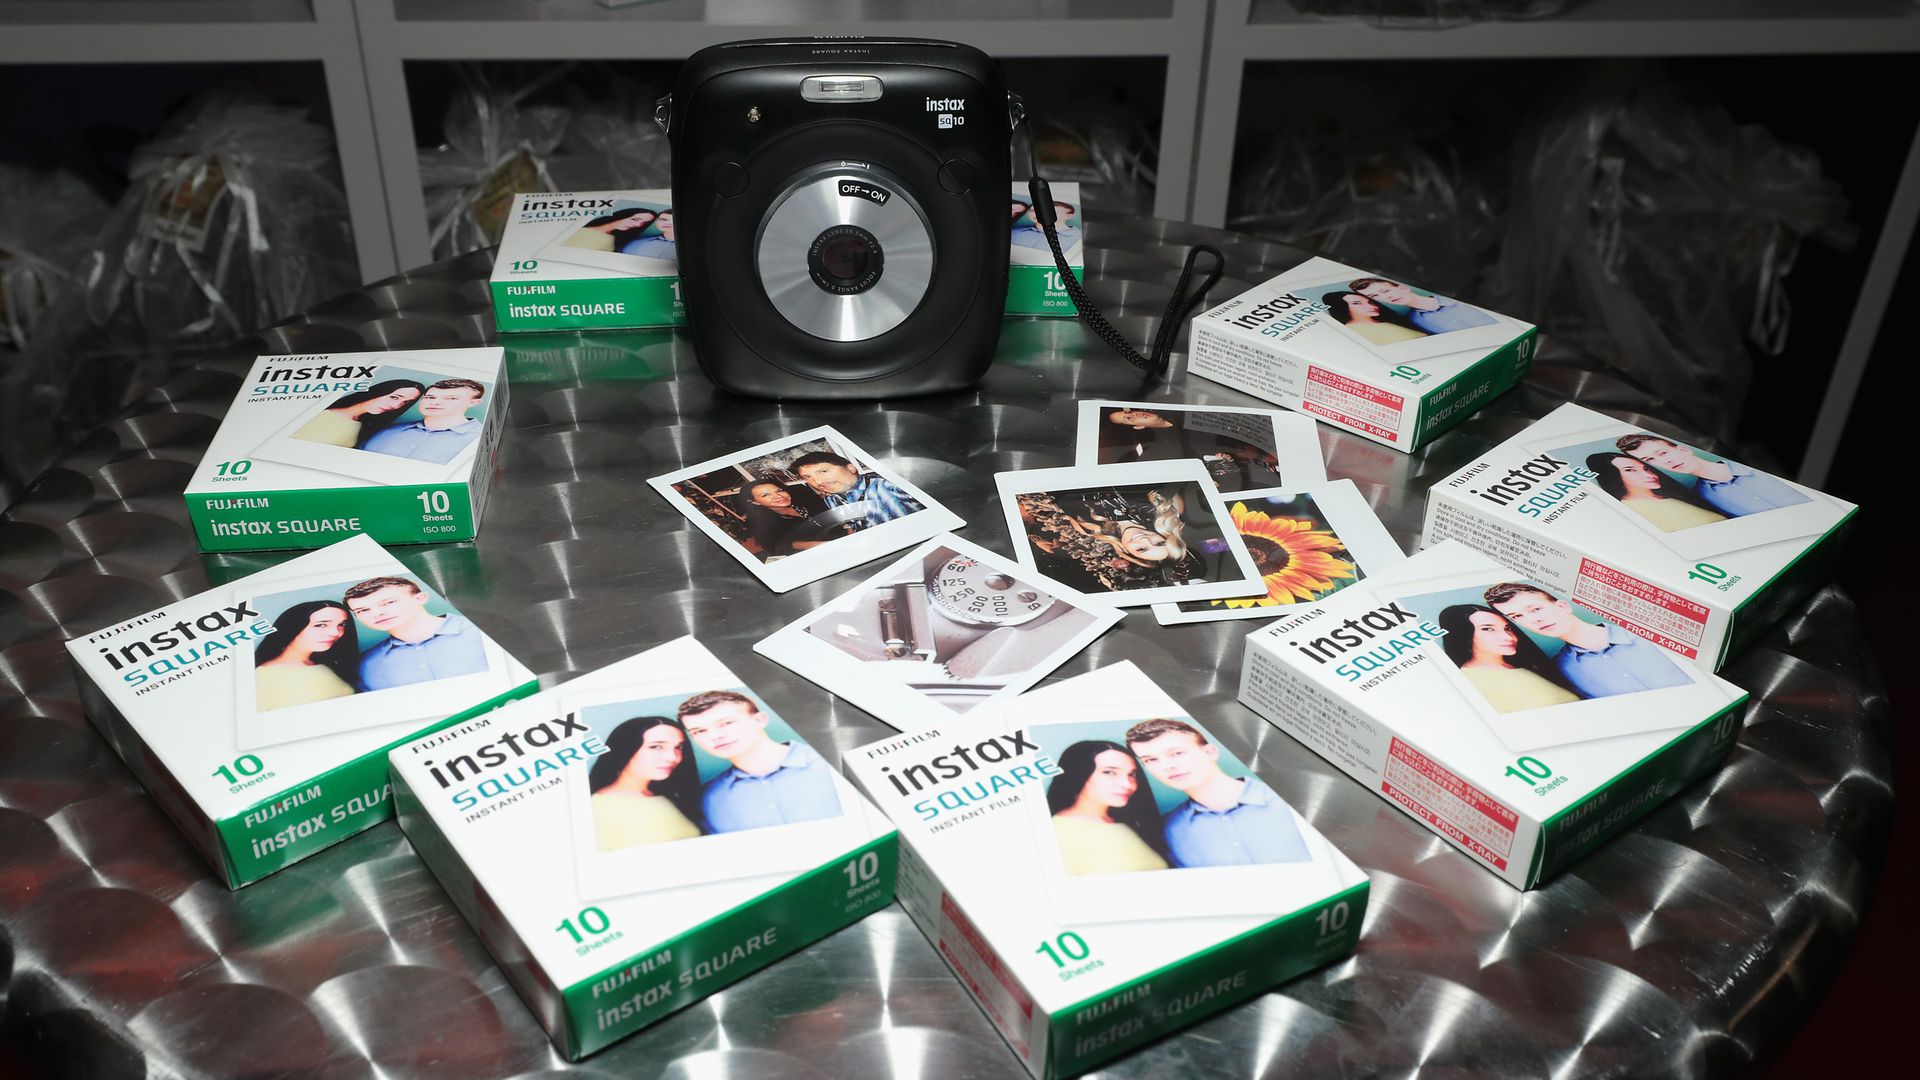 Fujifilm products